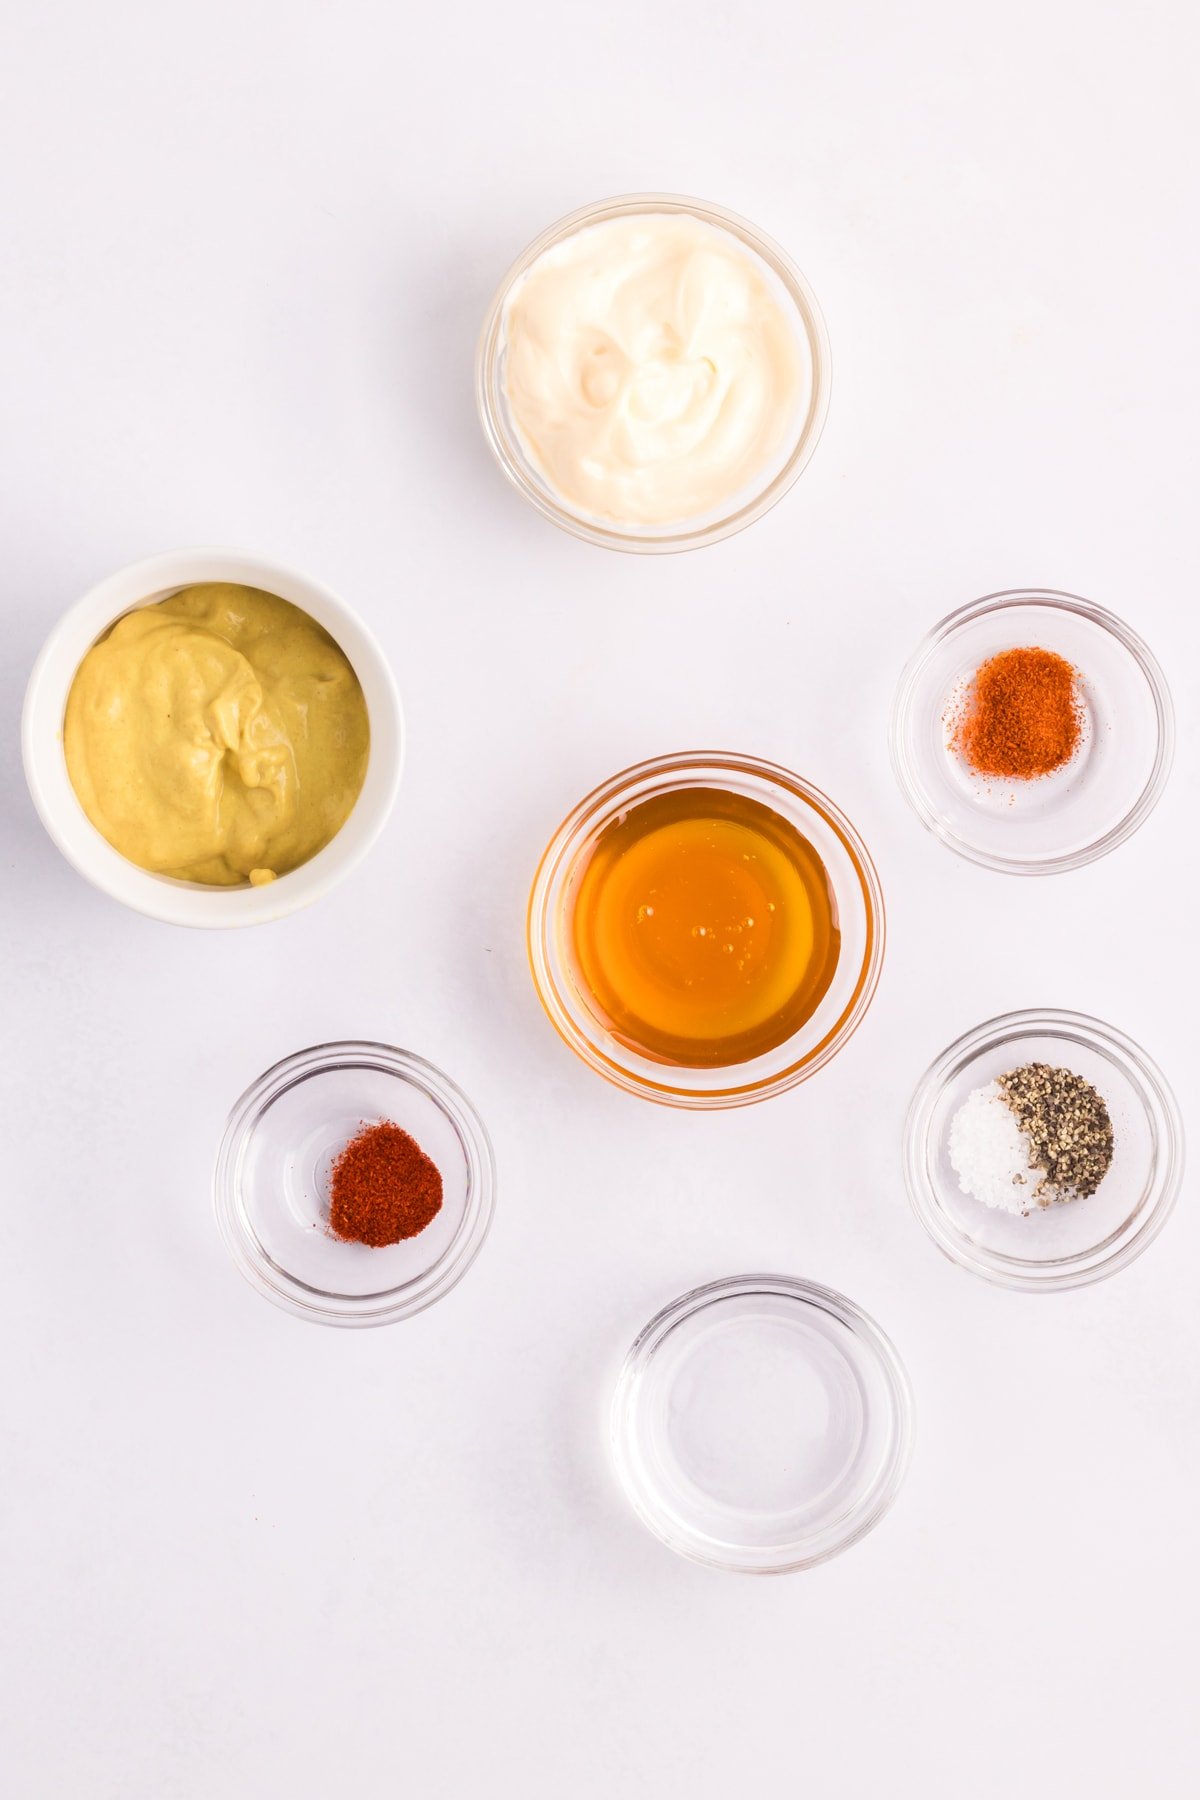 Ingredients needed to make honey mustard dipping sauce